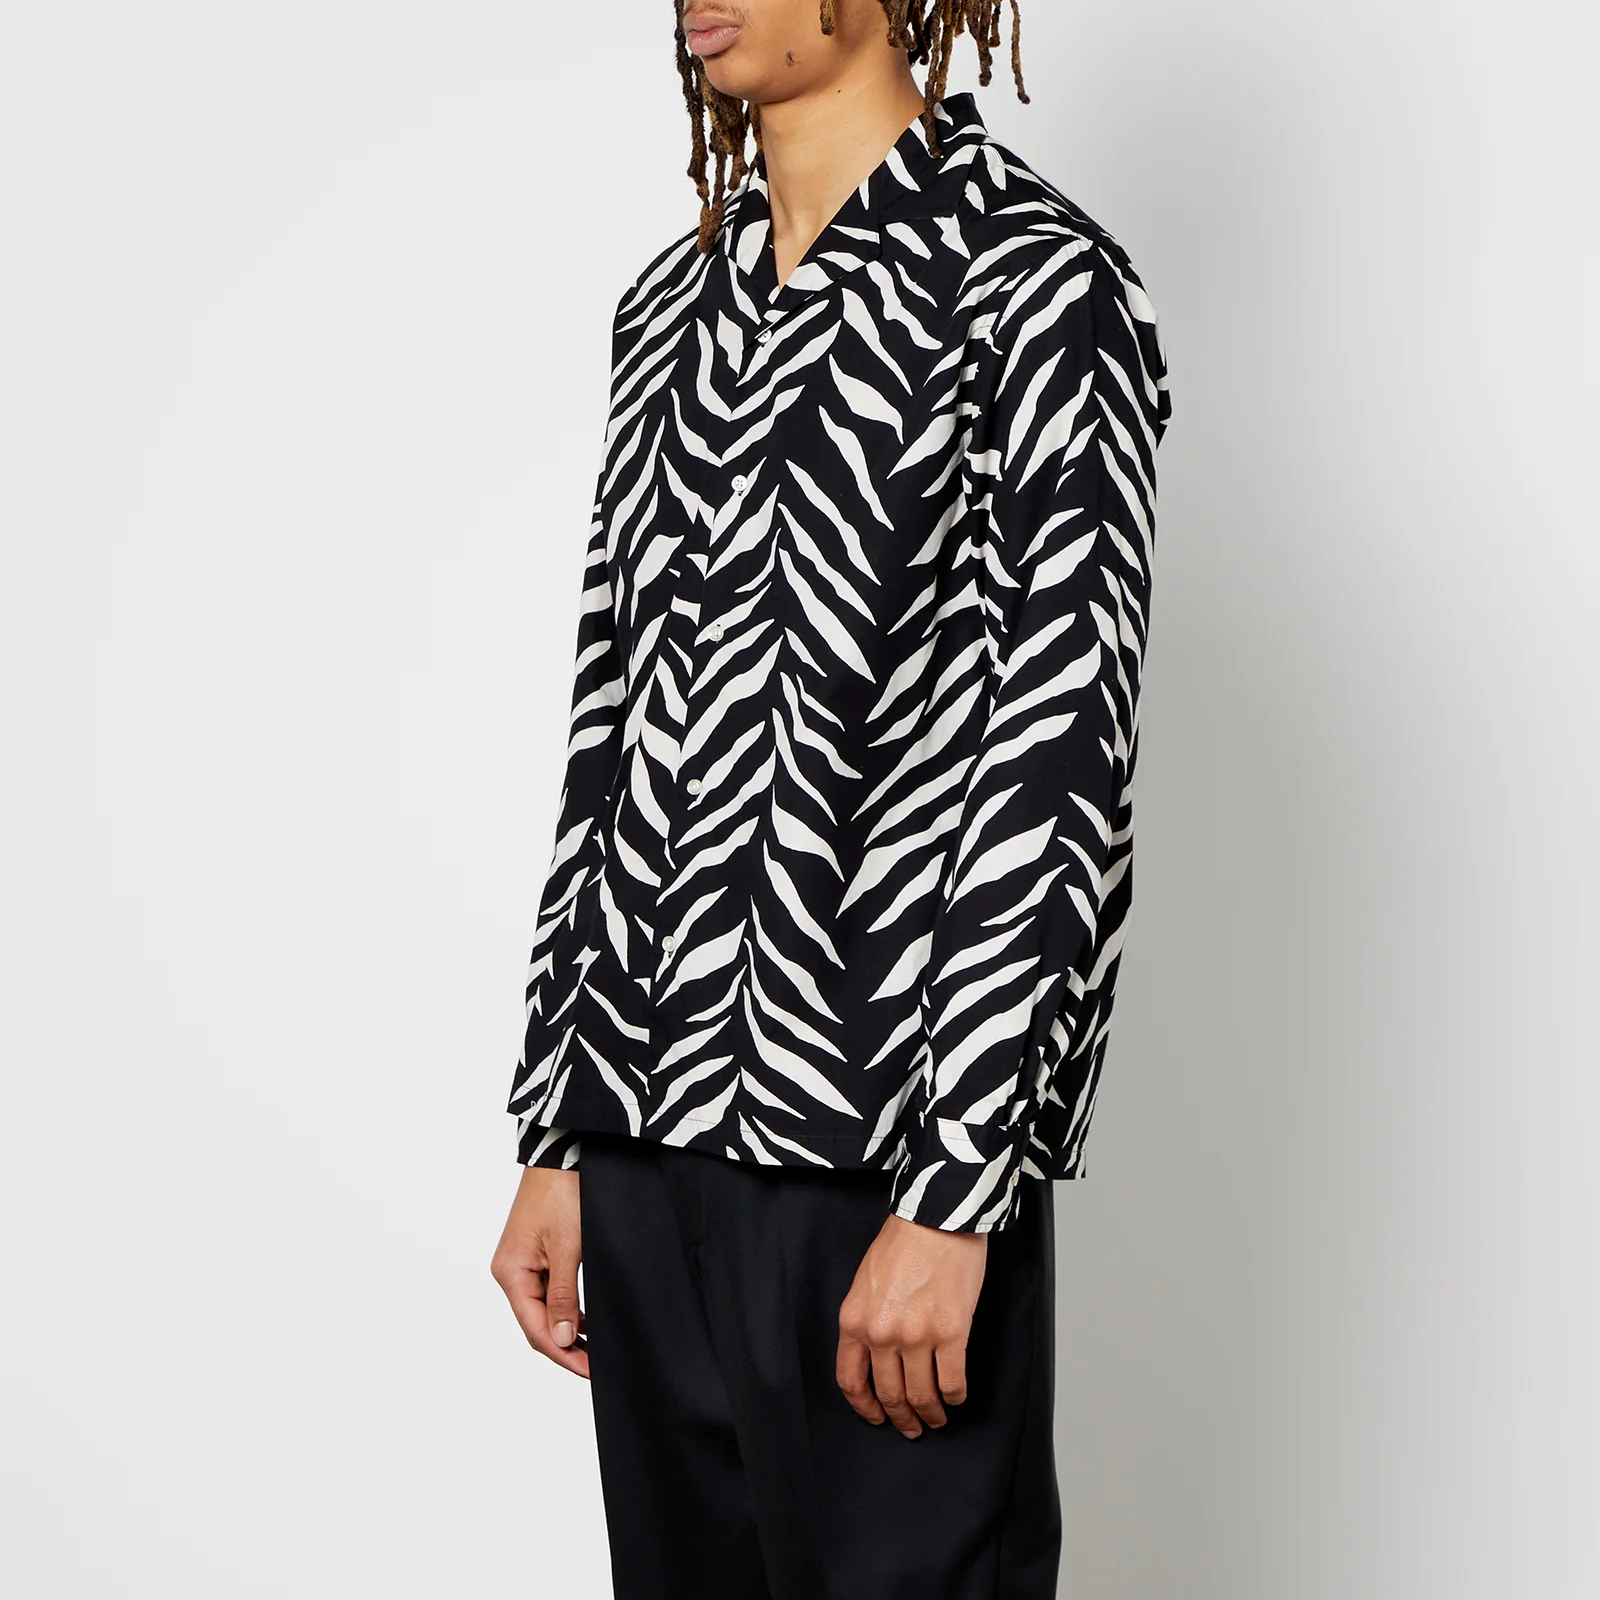 Officine Générale Men's Zebra Print Shirt - Black/White Image 1